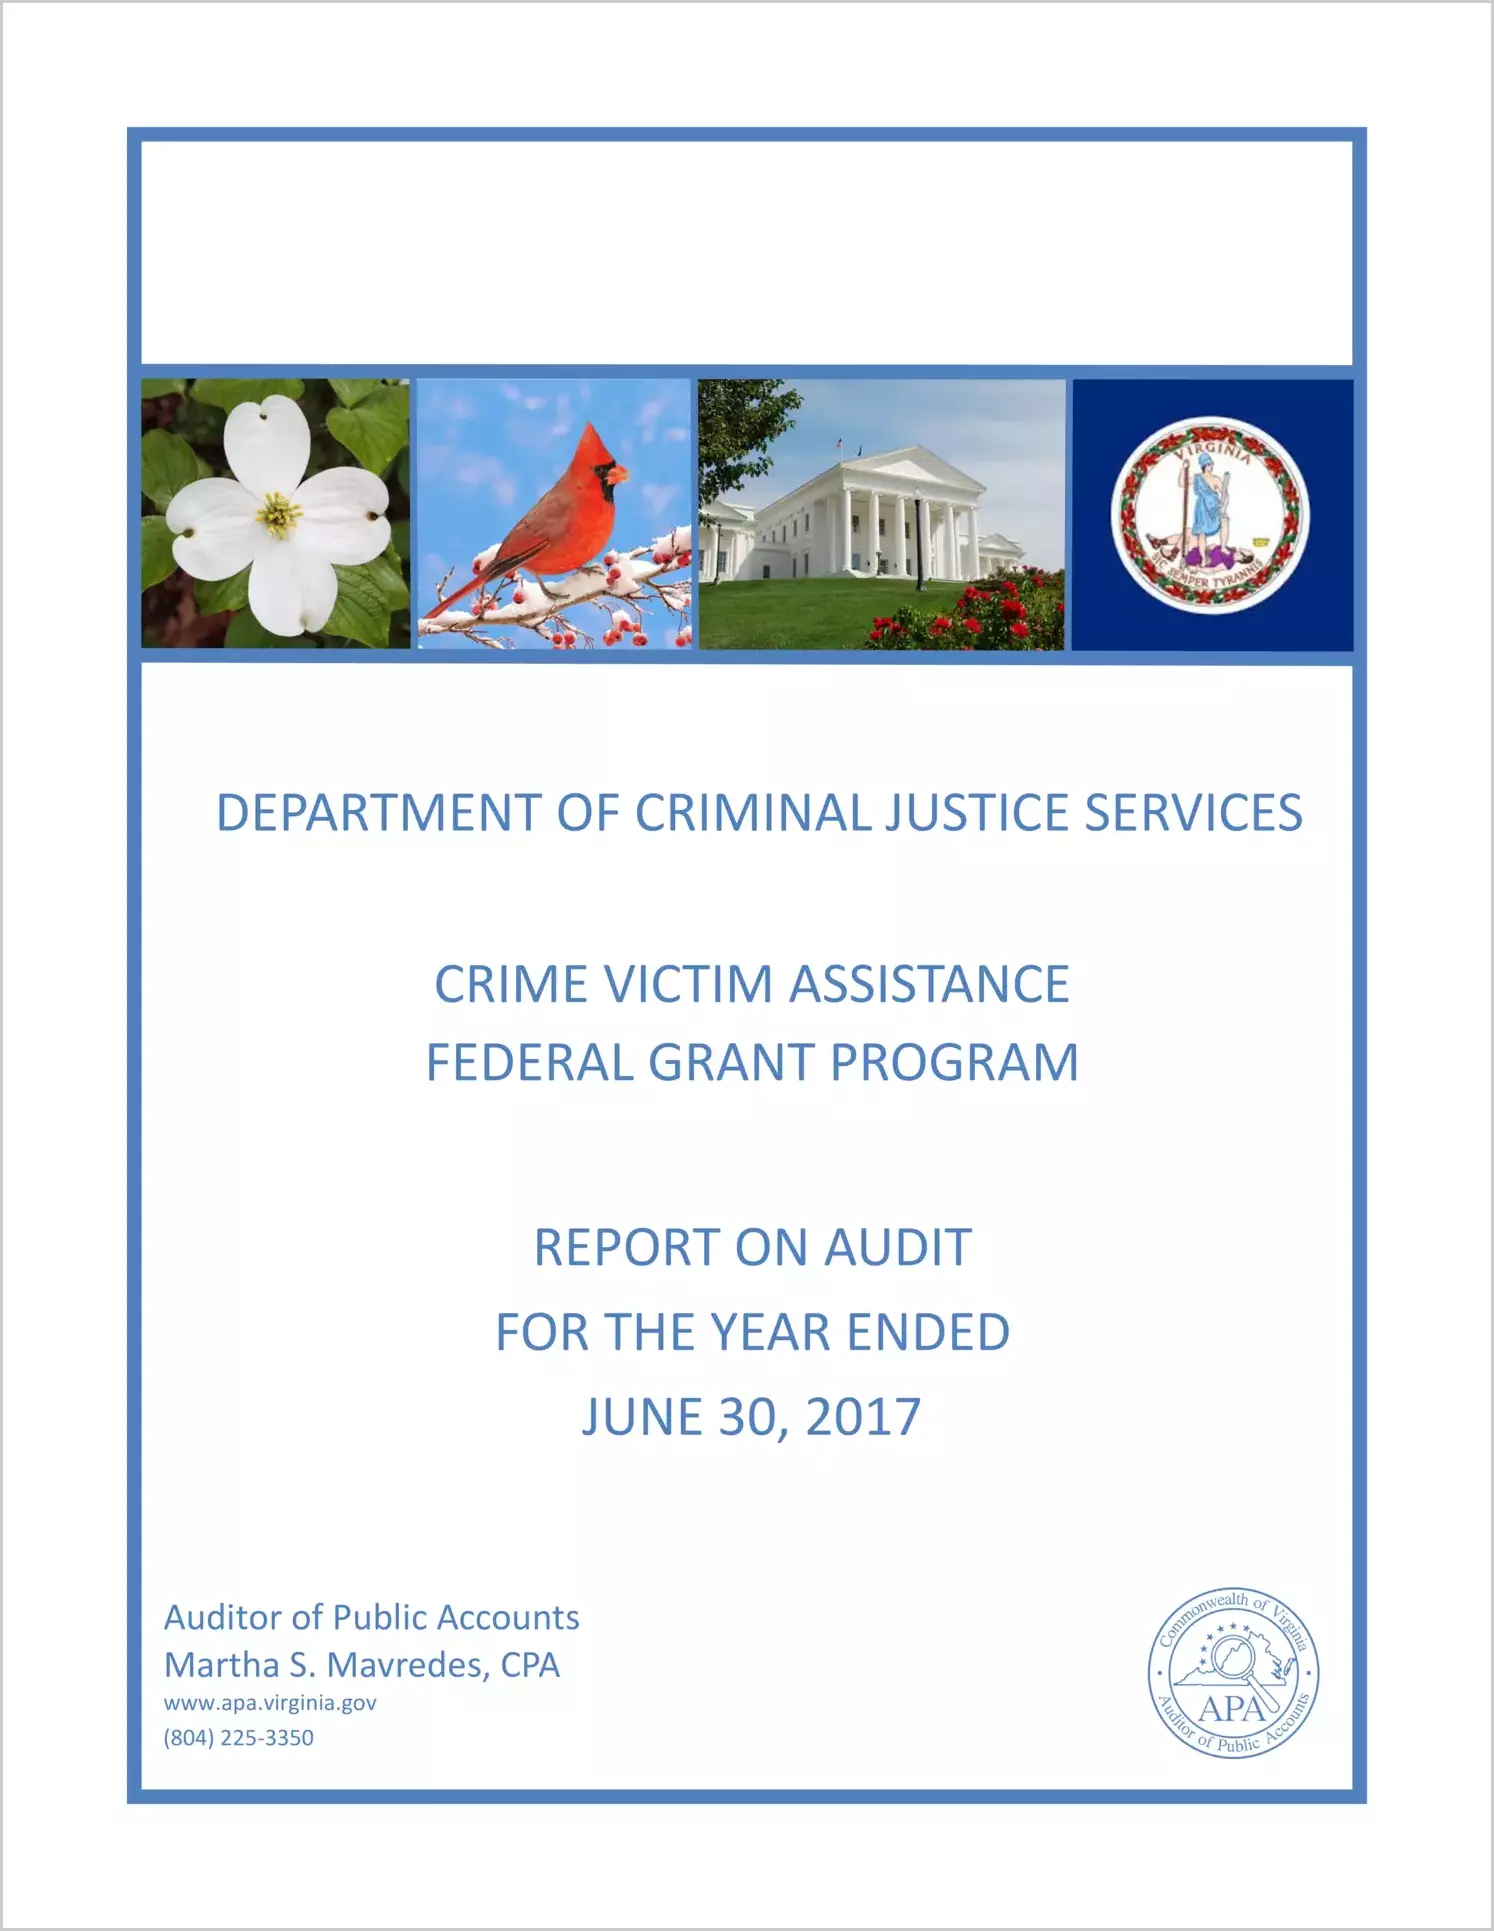 Department of Criminal Justice Services Crime Victim Assistance Federal Grant Program for the year ended June 30, 2017